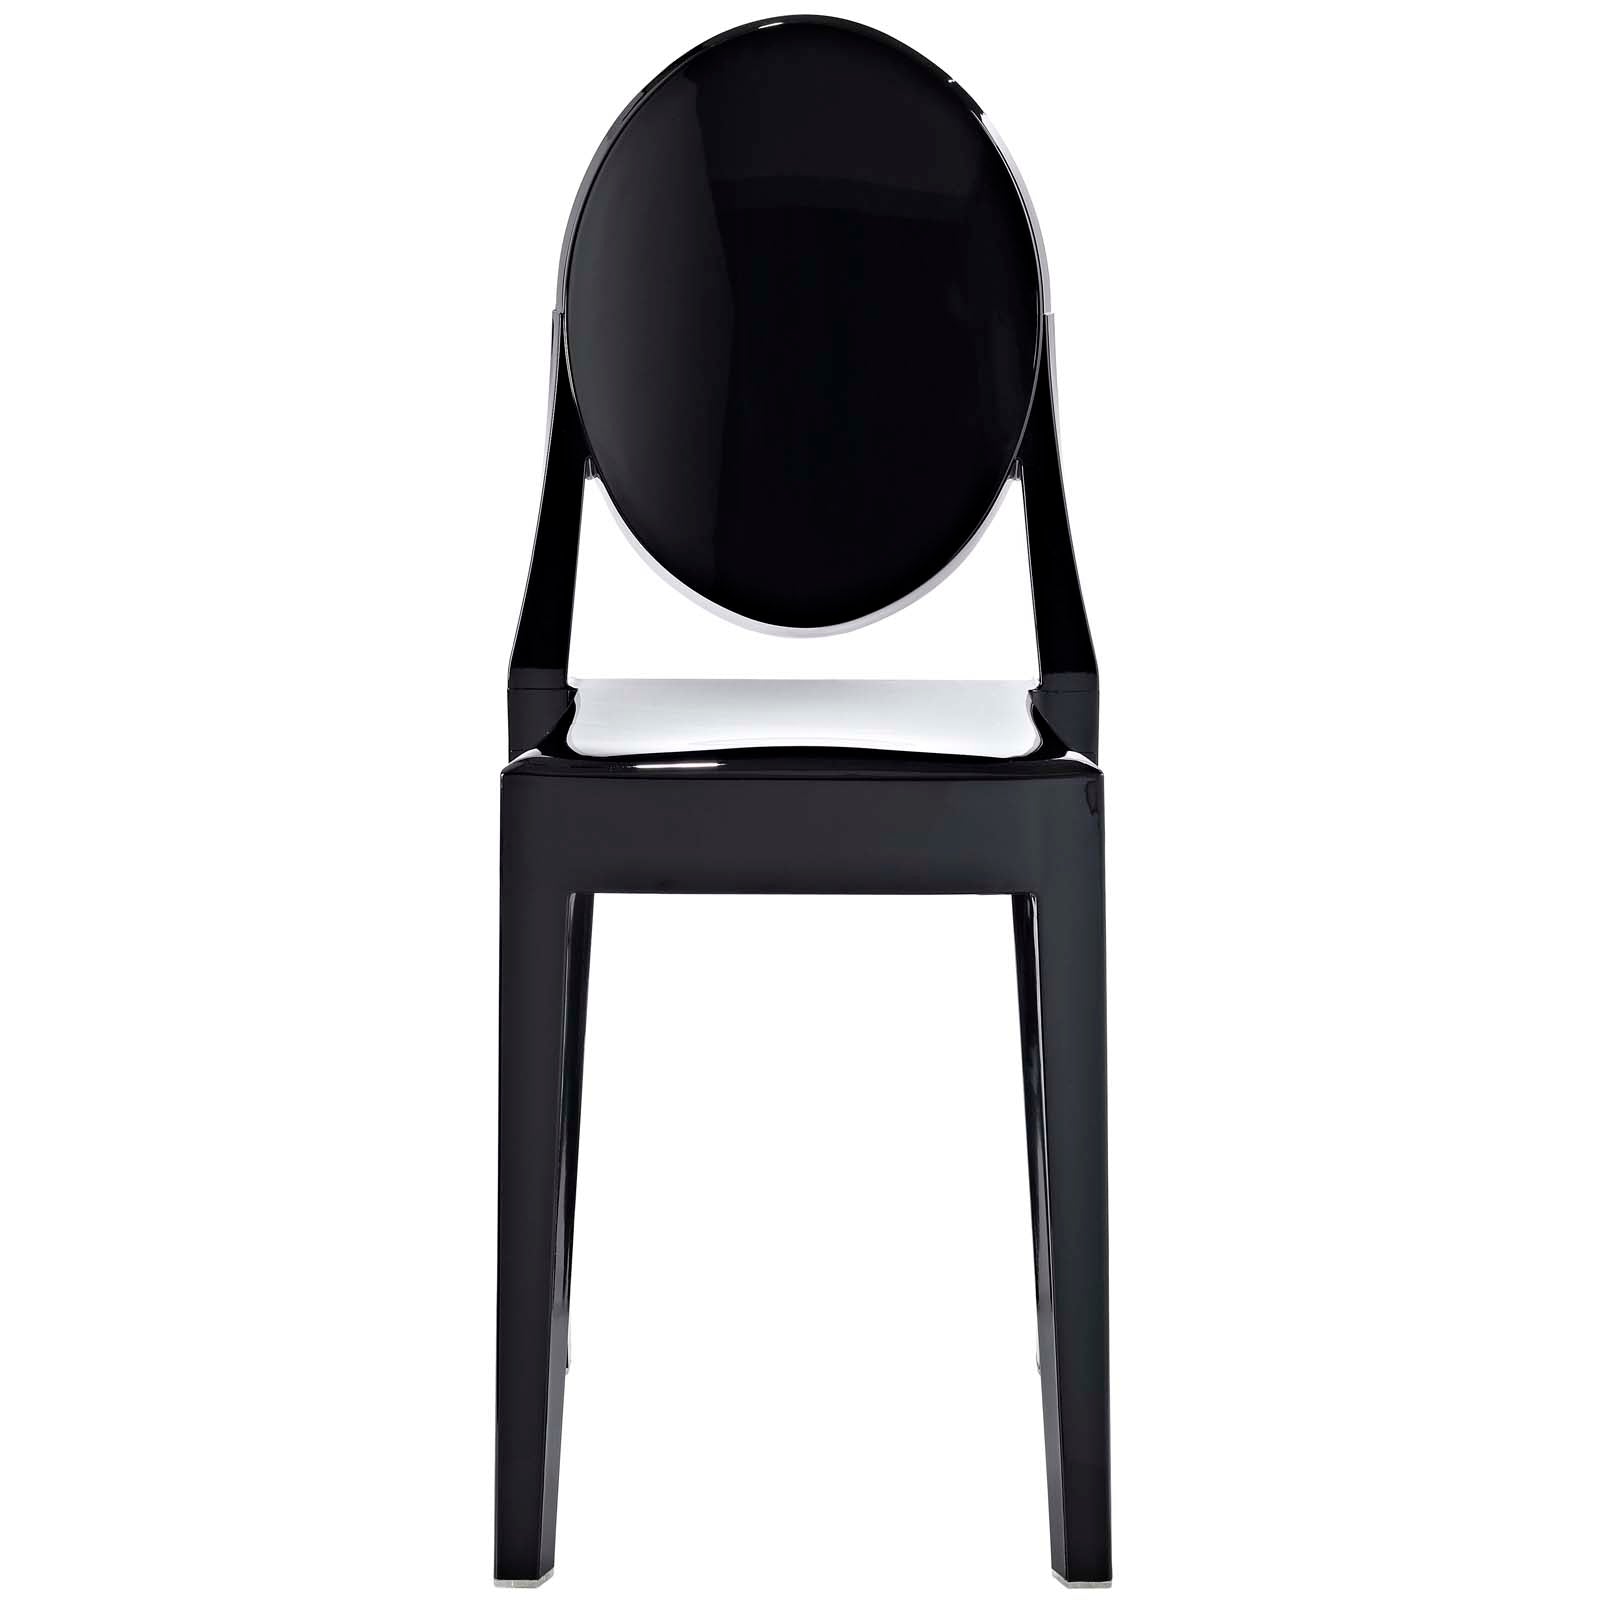 Casper Dining Side Chair - Black